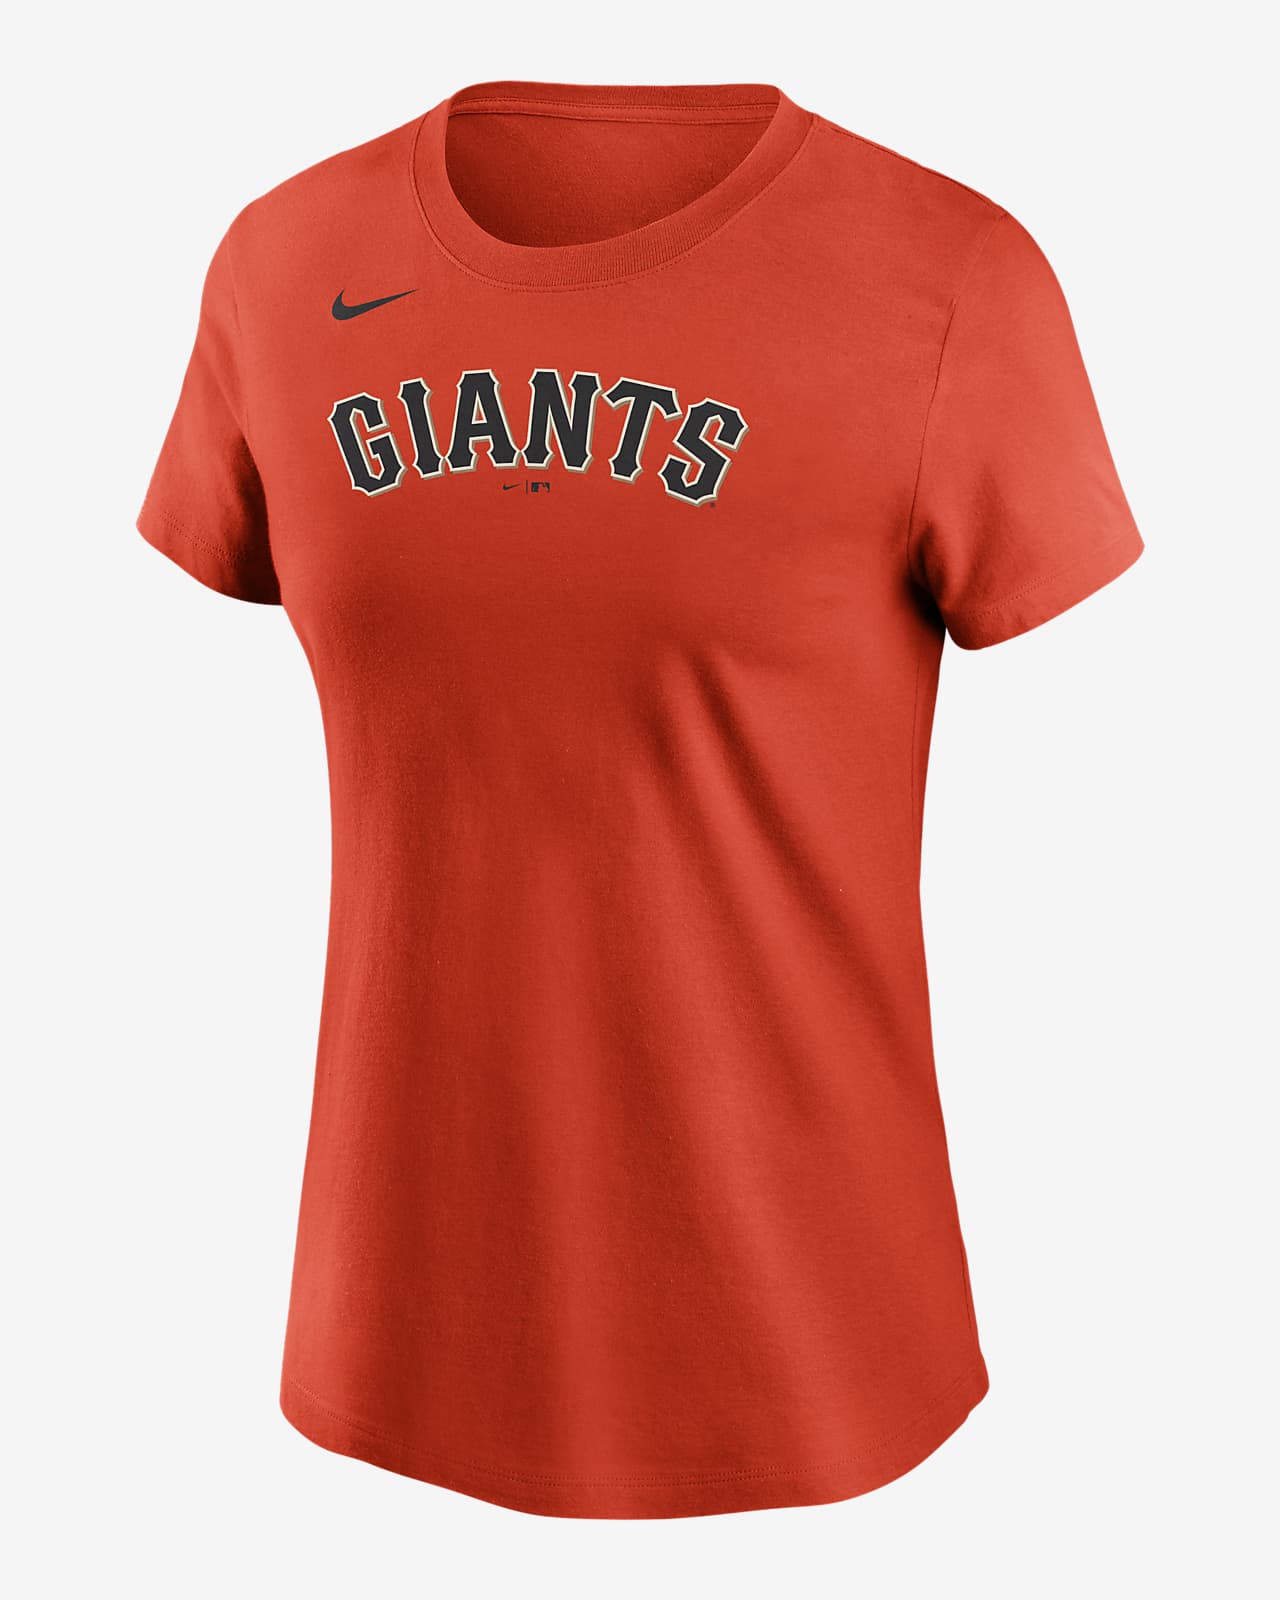 san francisco giants women's t shirts